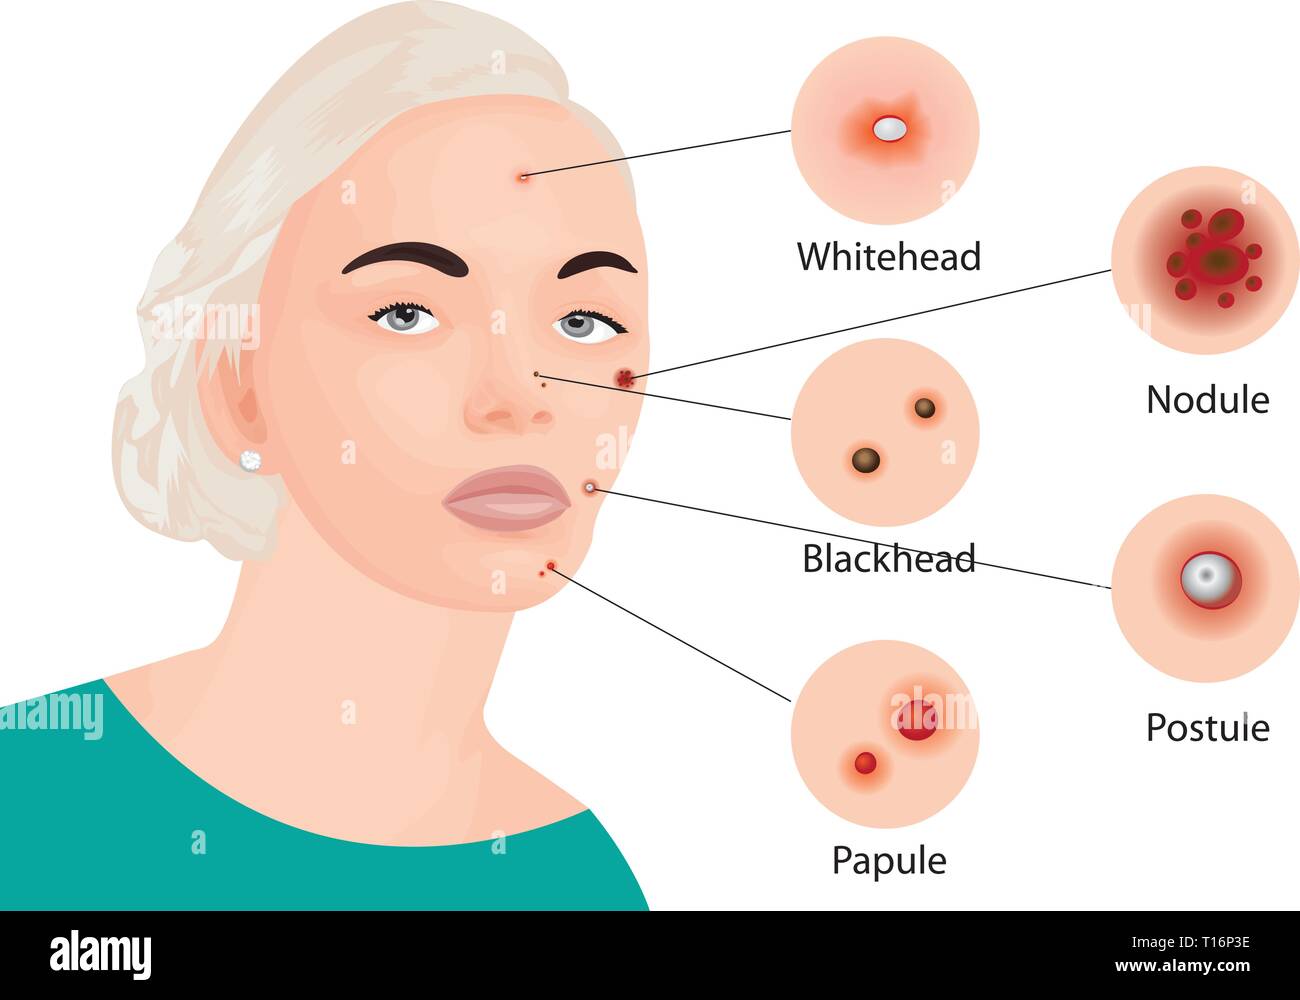 Akne Arten Auf Einer Flache Vector Illustration Kosmetika Hautpflege Haut Behandlung Stock Vektorgrafik Alamy